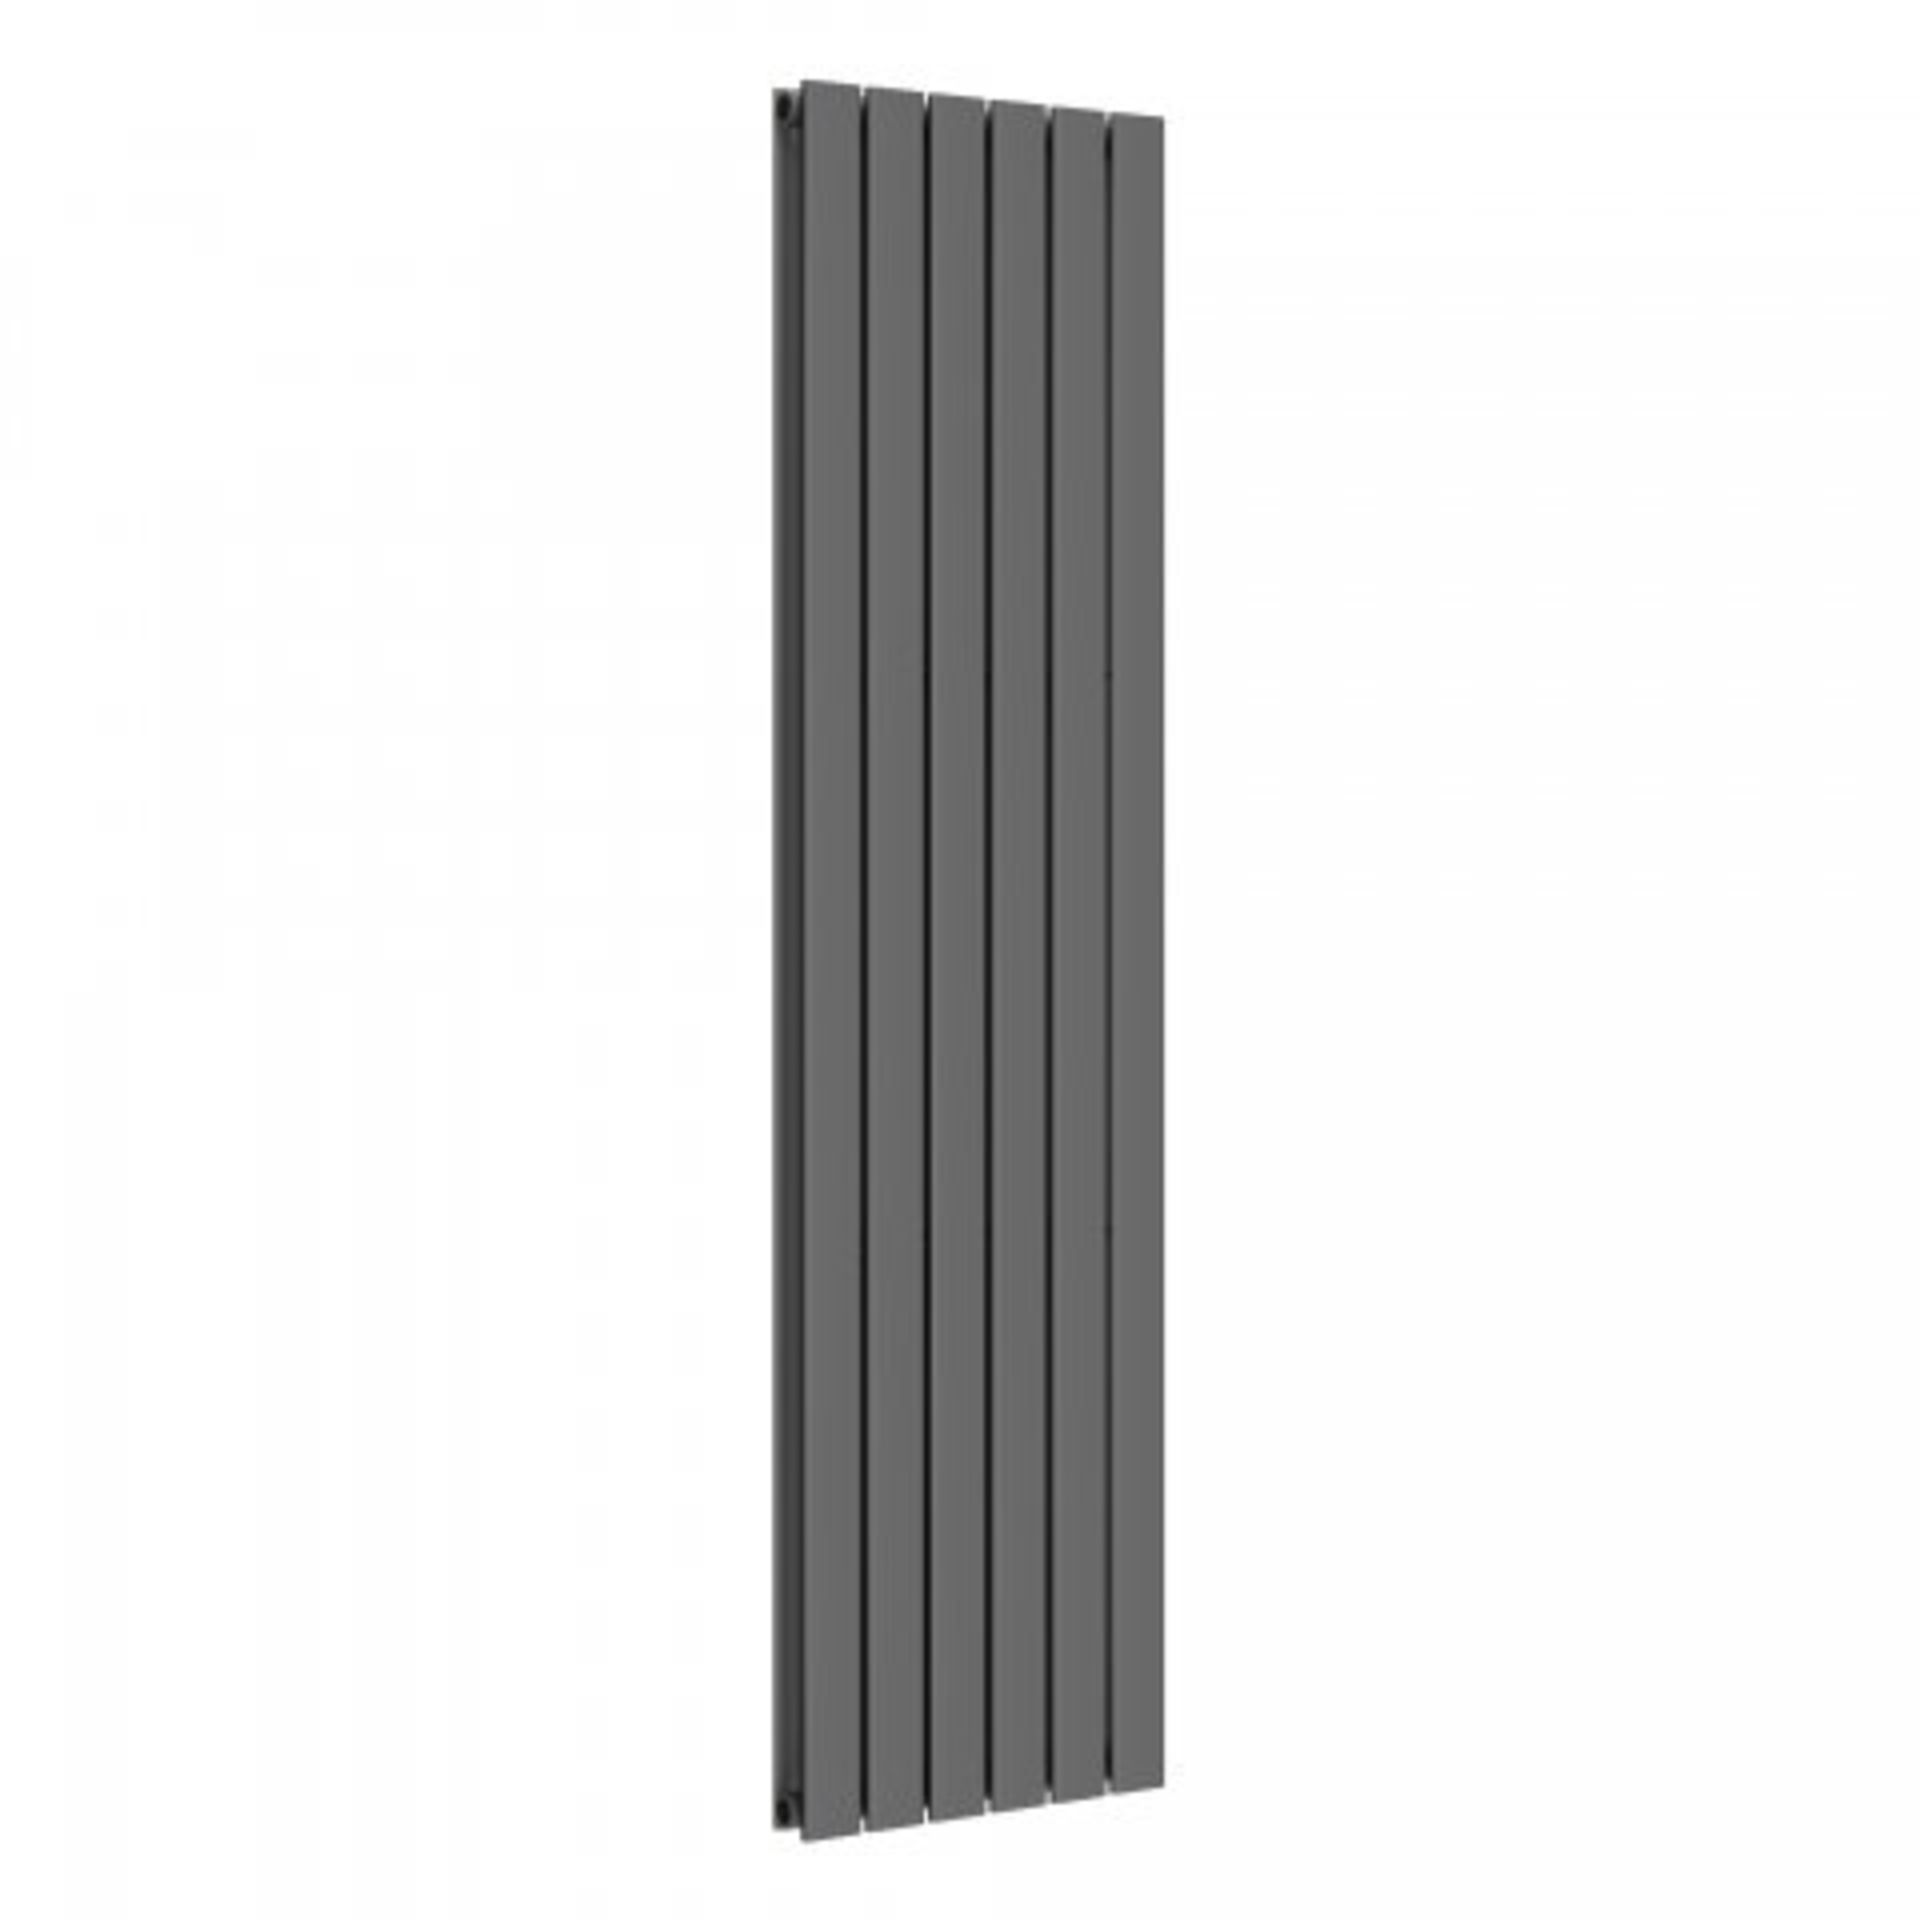 (I32) 1800x458mm Anthracite Double Flat Panel Vertical Radiator - Thera Range. RRP £499.99. Designer - Image 2 of 3